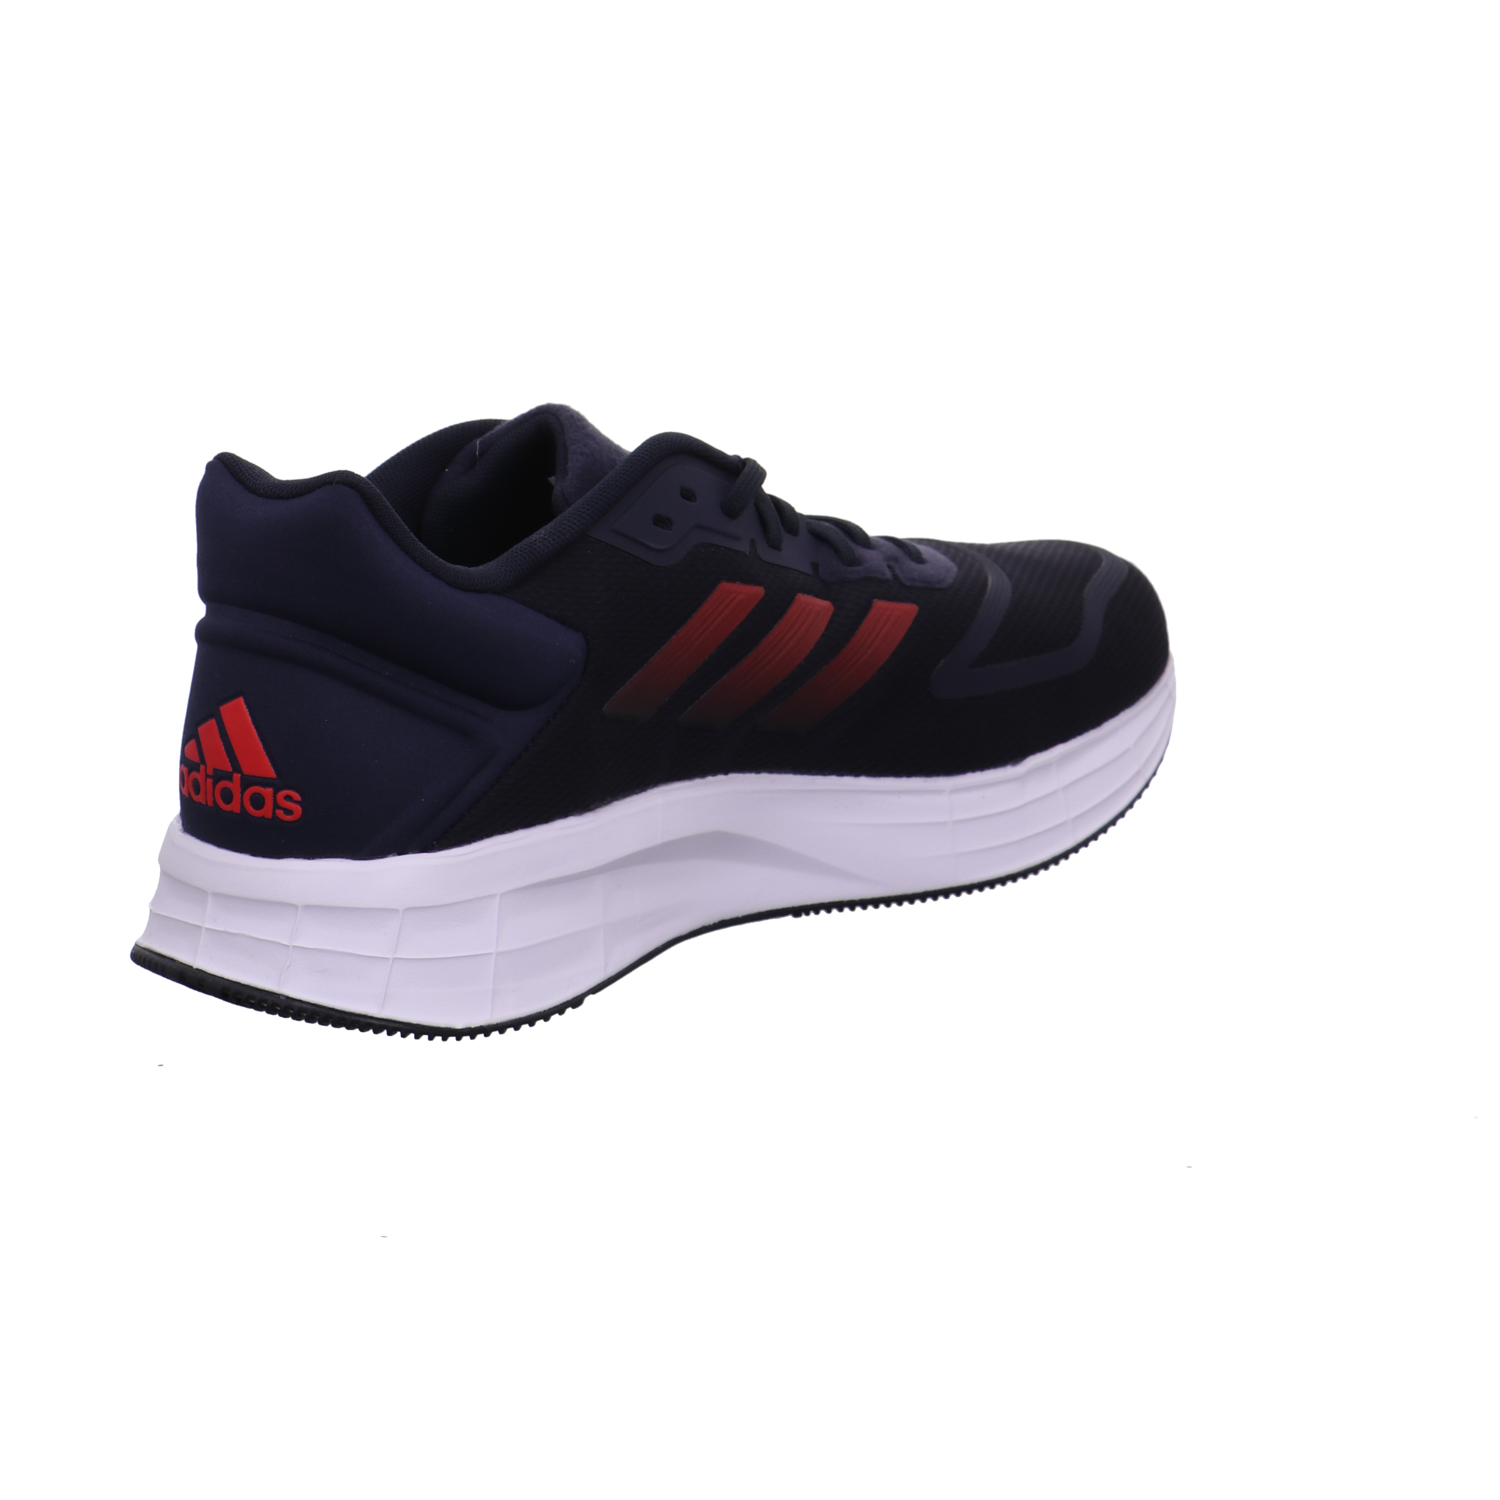 Adidas Sneaker schwarz kombi Bild5